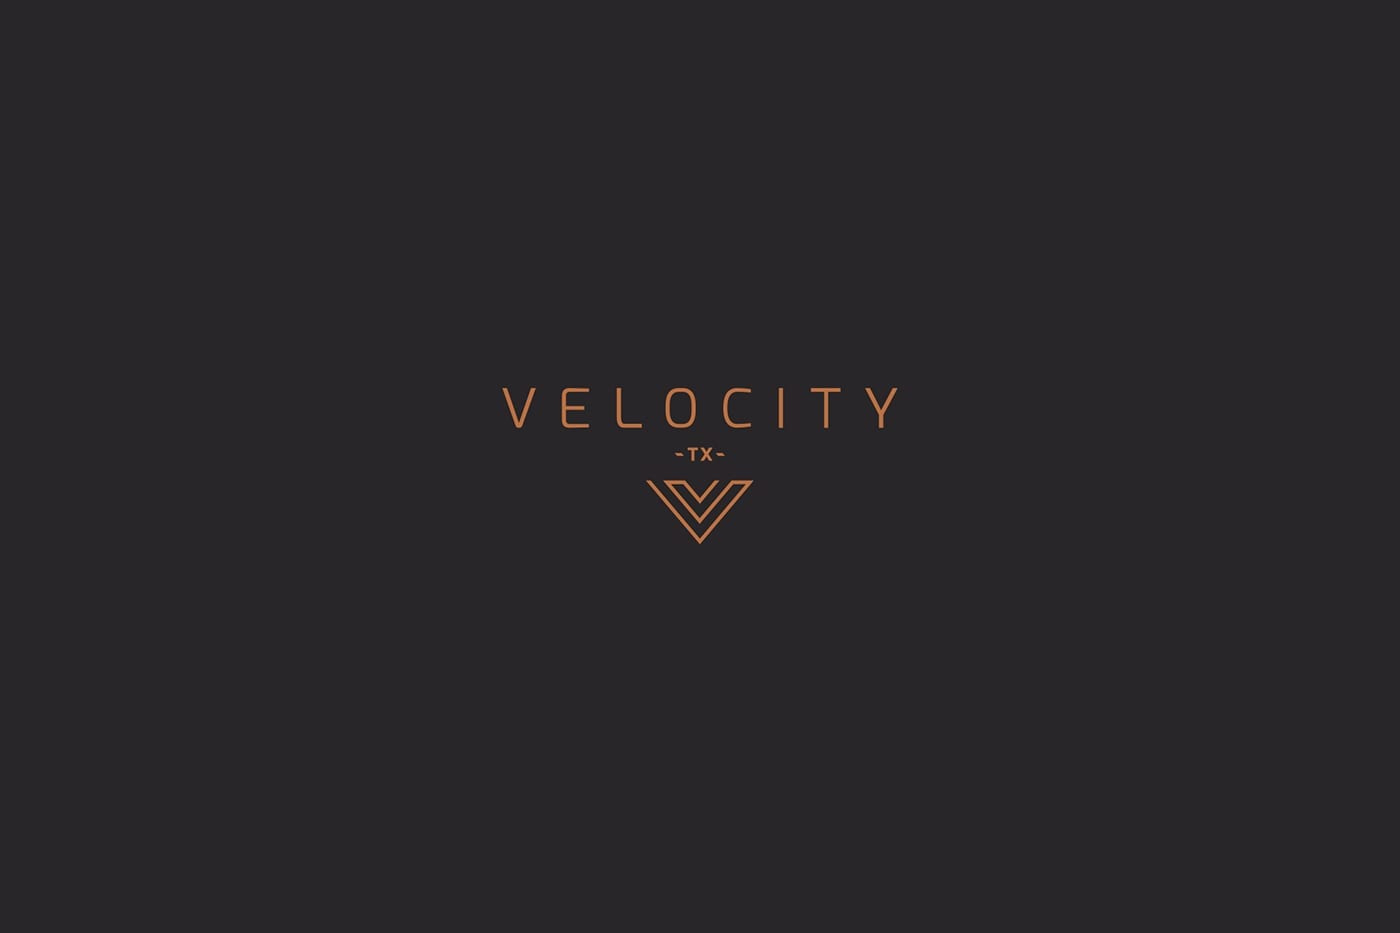 The Brand Identity for Velocity Tx.